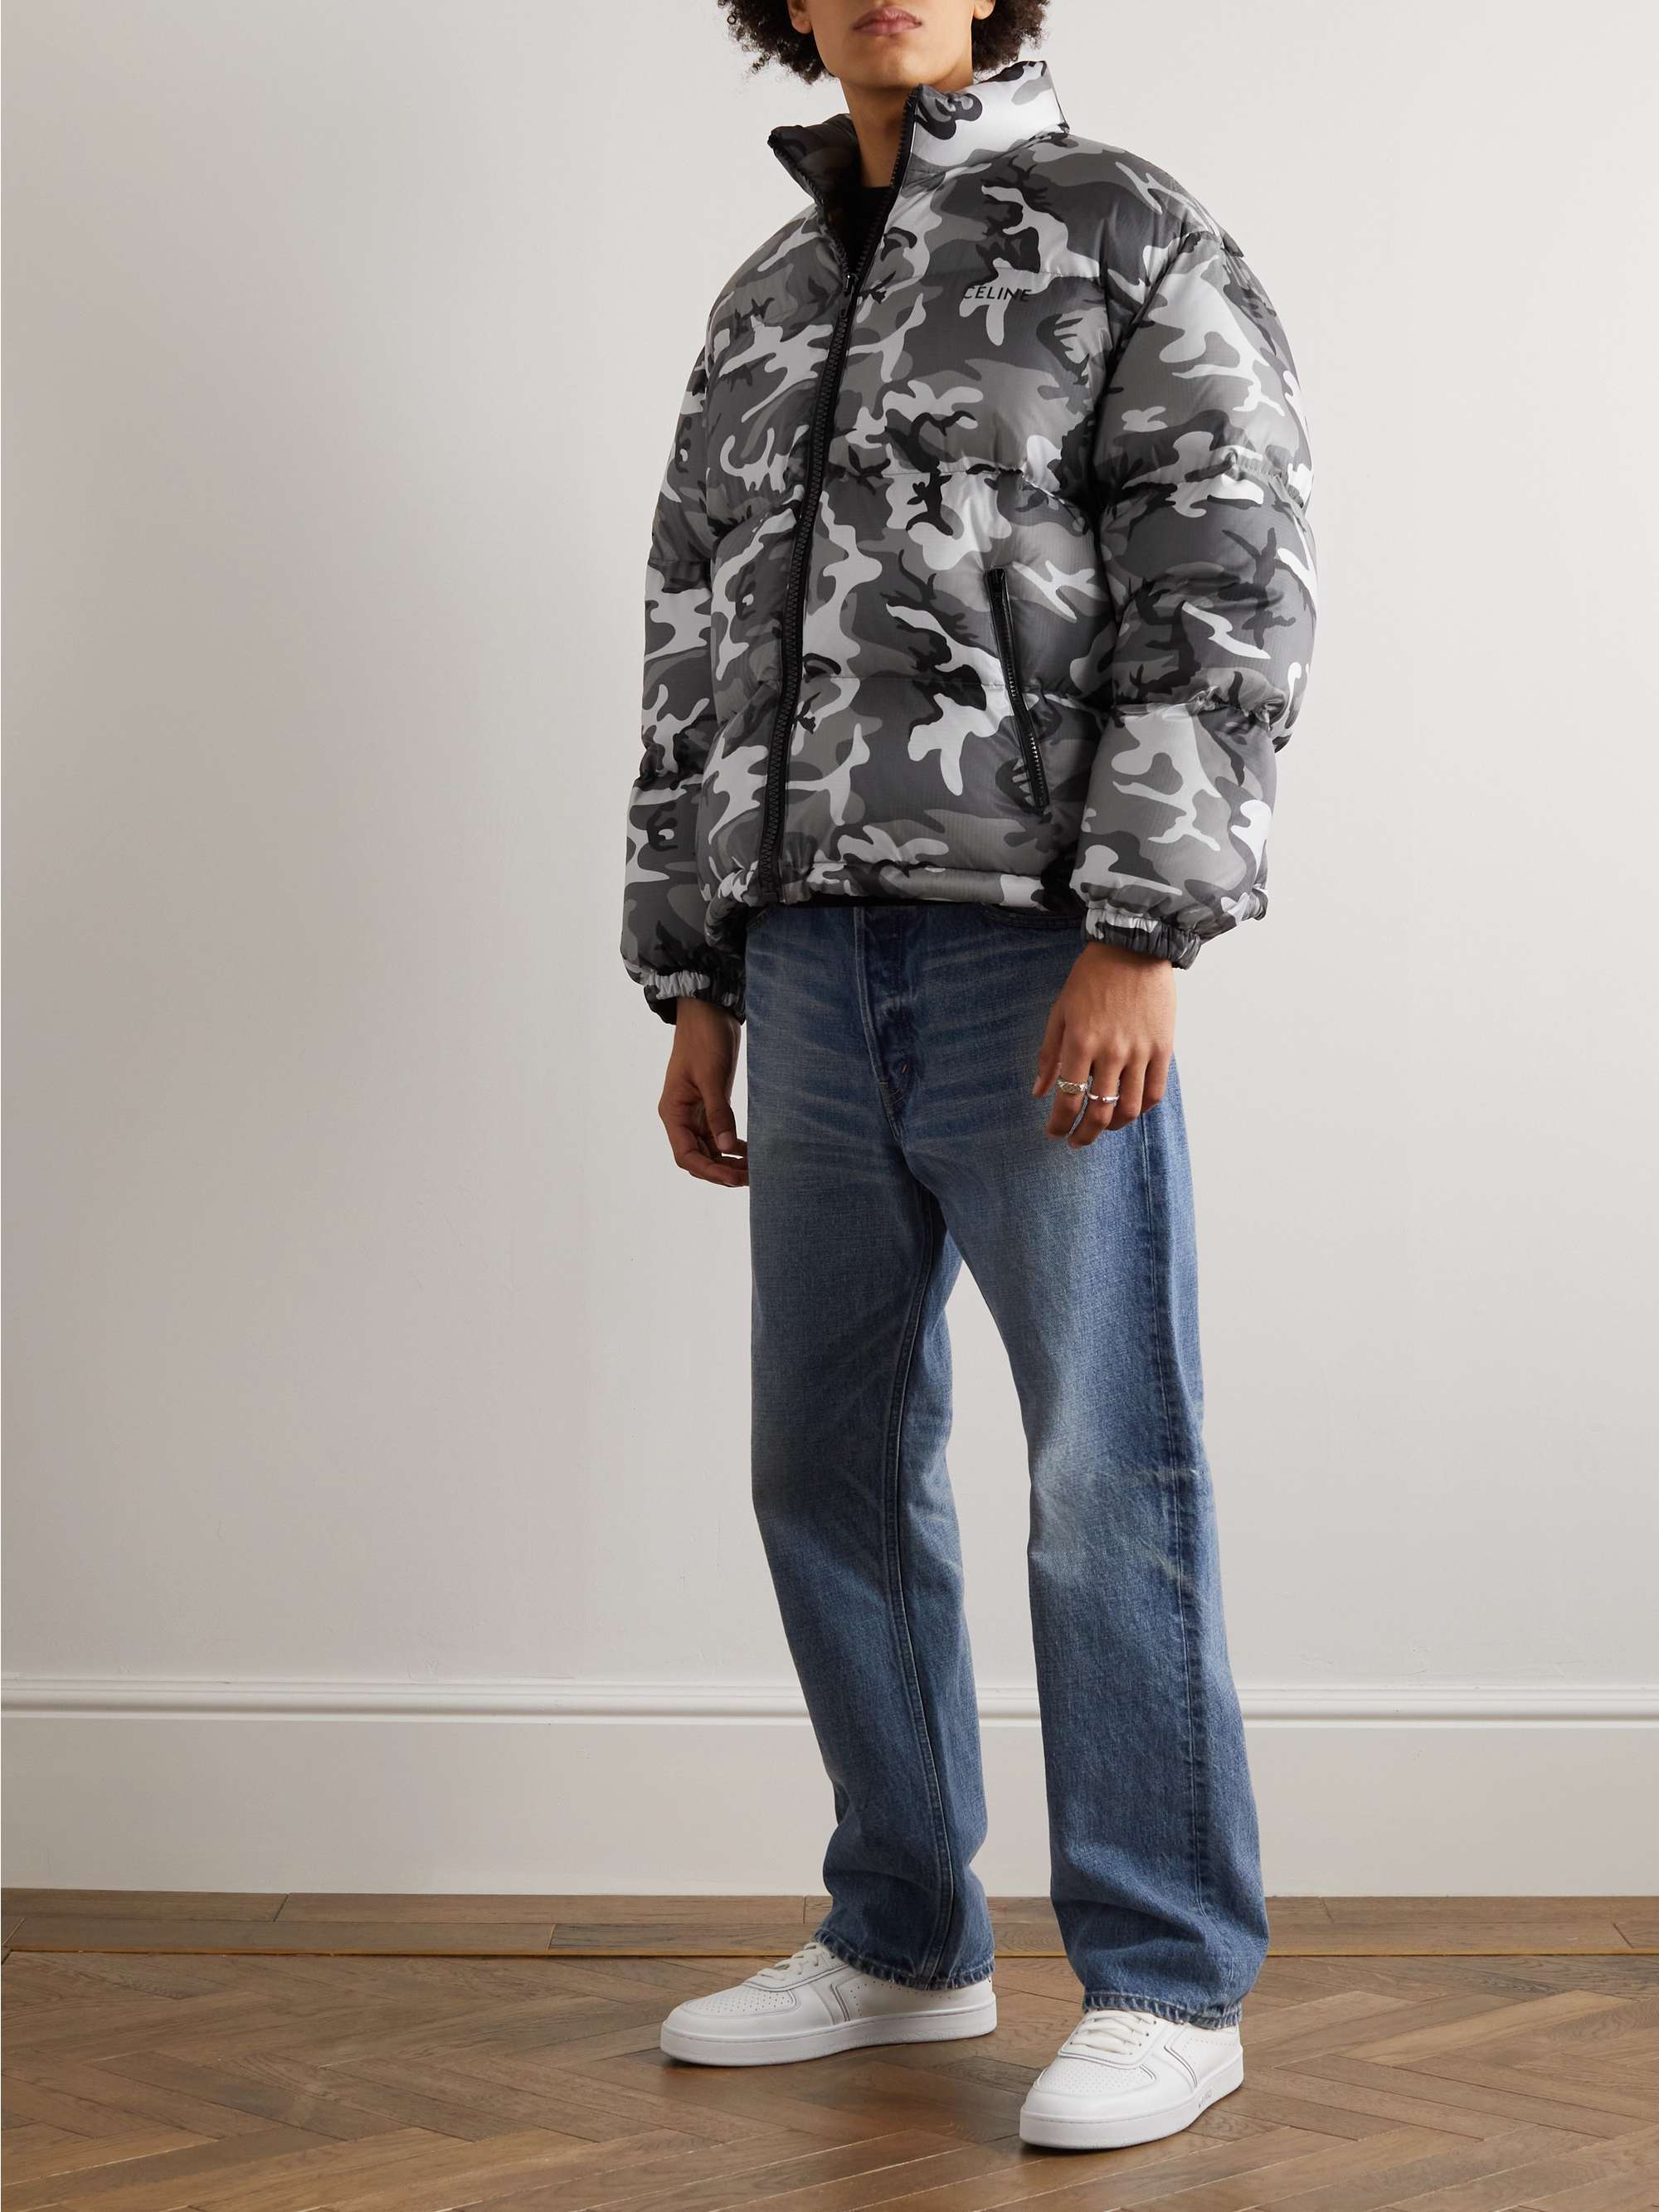 CELINE HOMME Camouflage-Print Nylon-Ripstop Down Jacket | MR PORTER